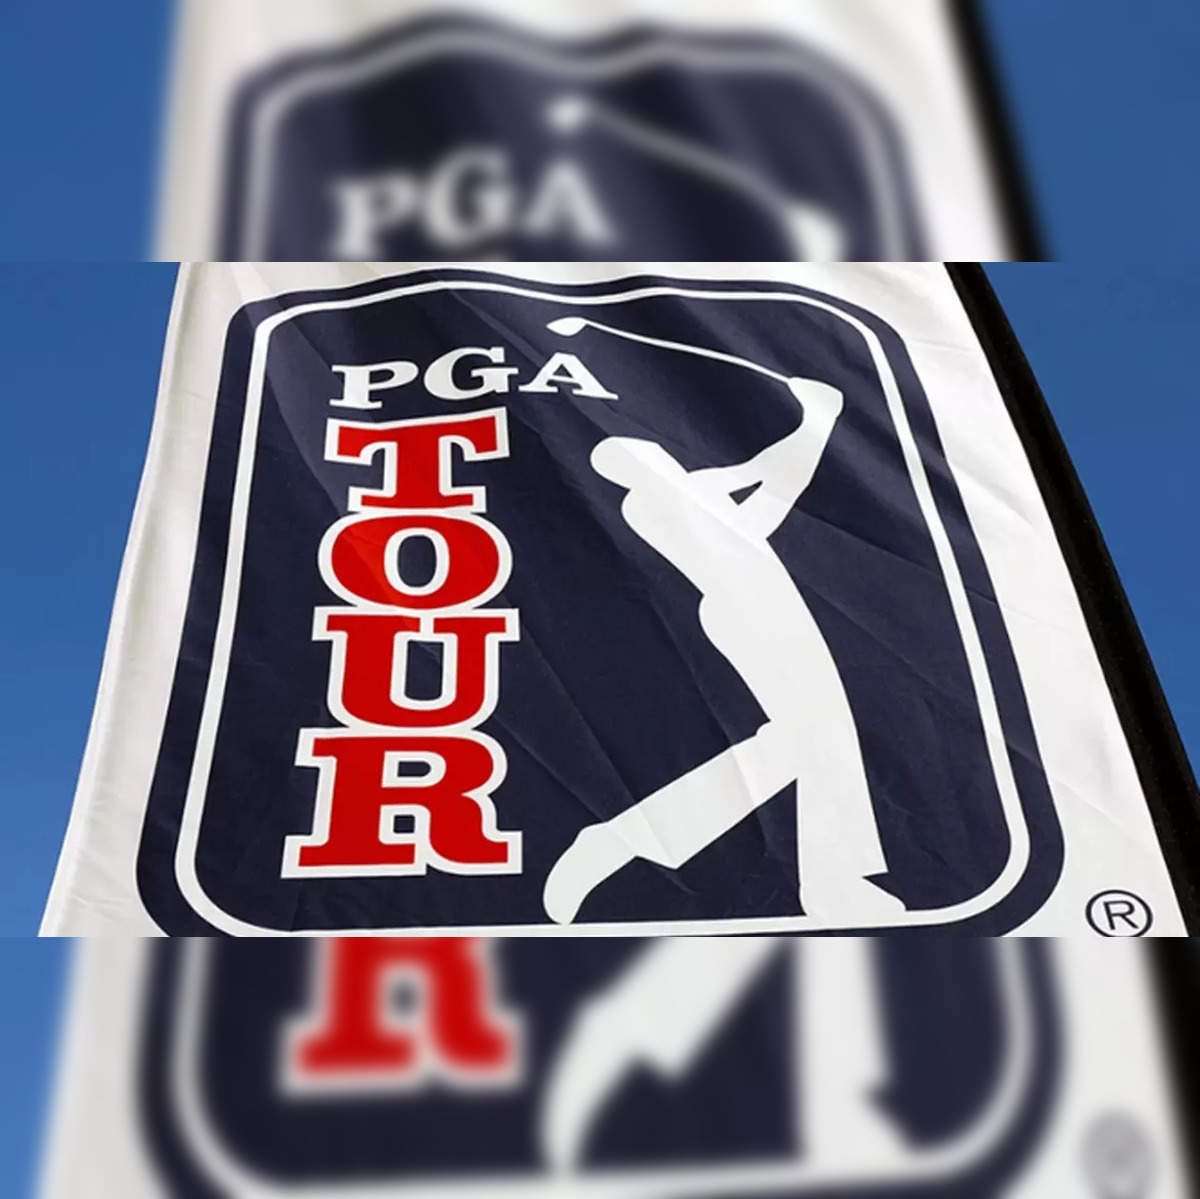 Golf PGA Tour, European Tour and Saudi-backed LIV Golf announce merger